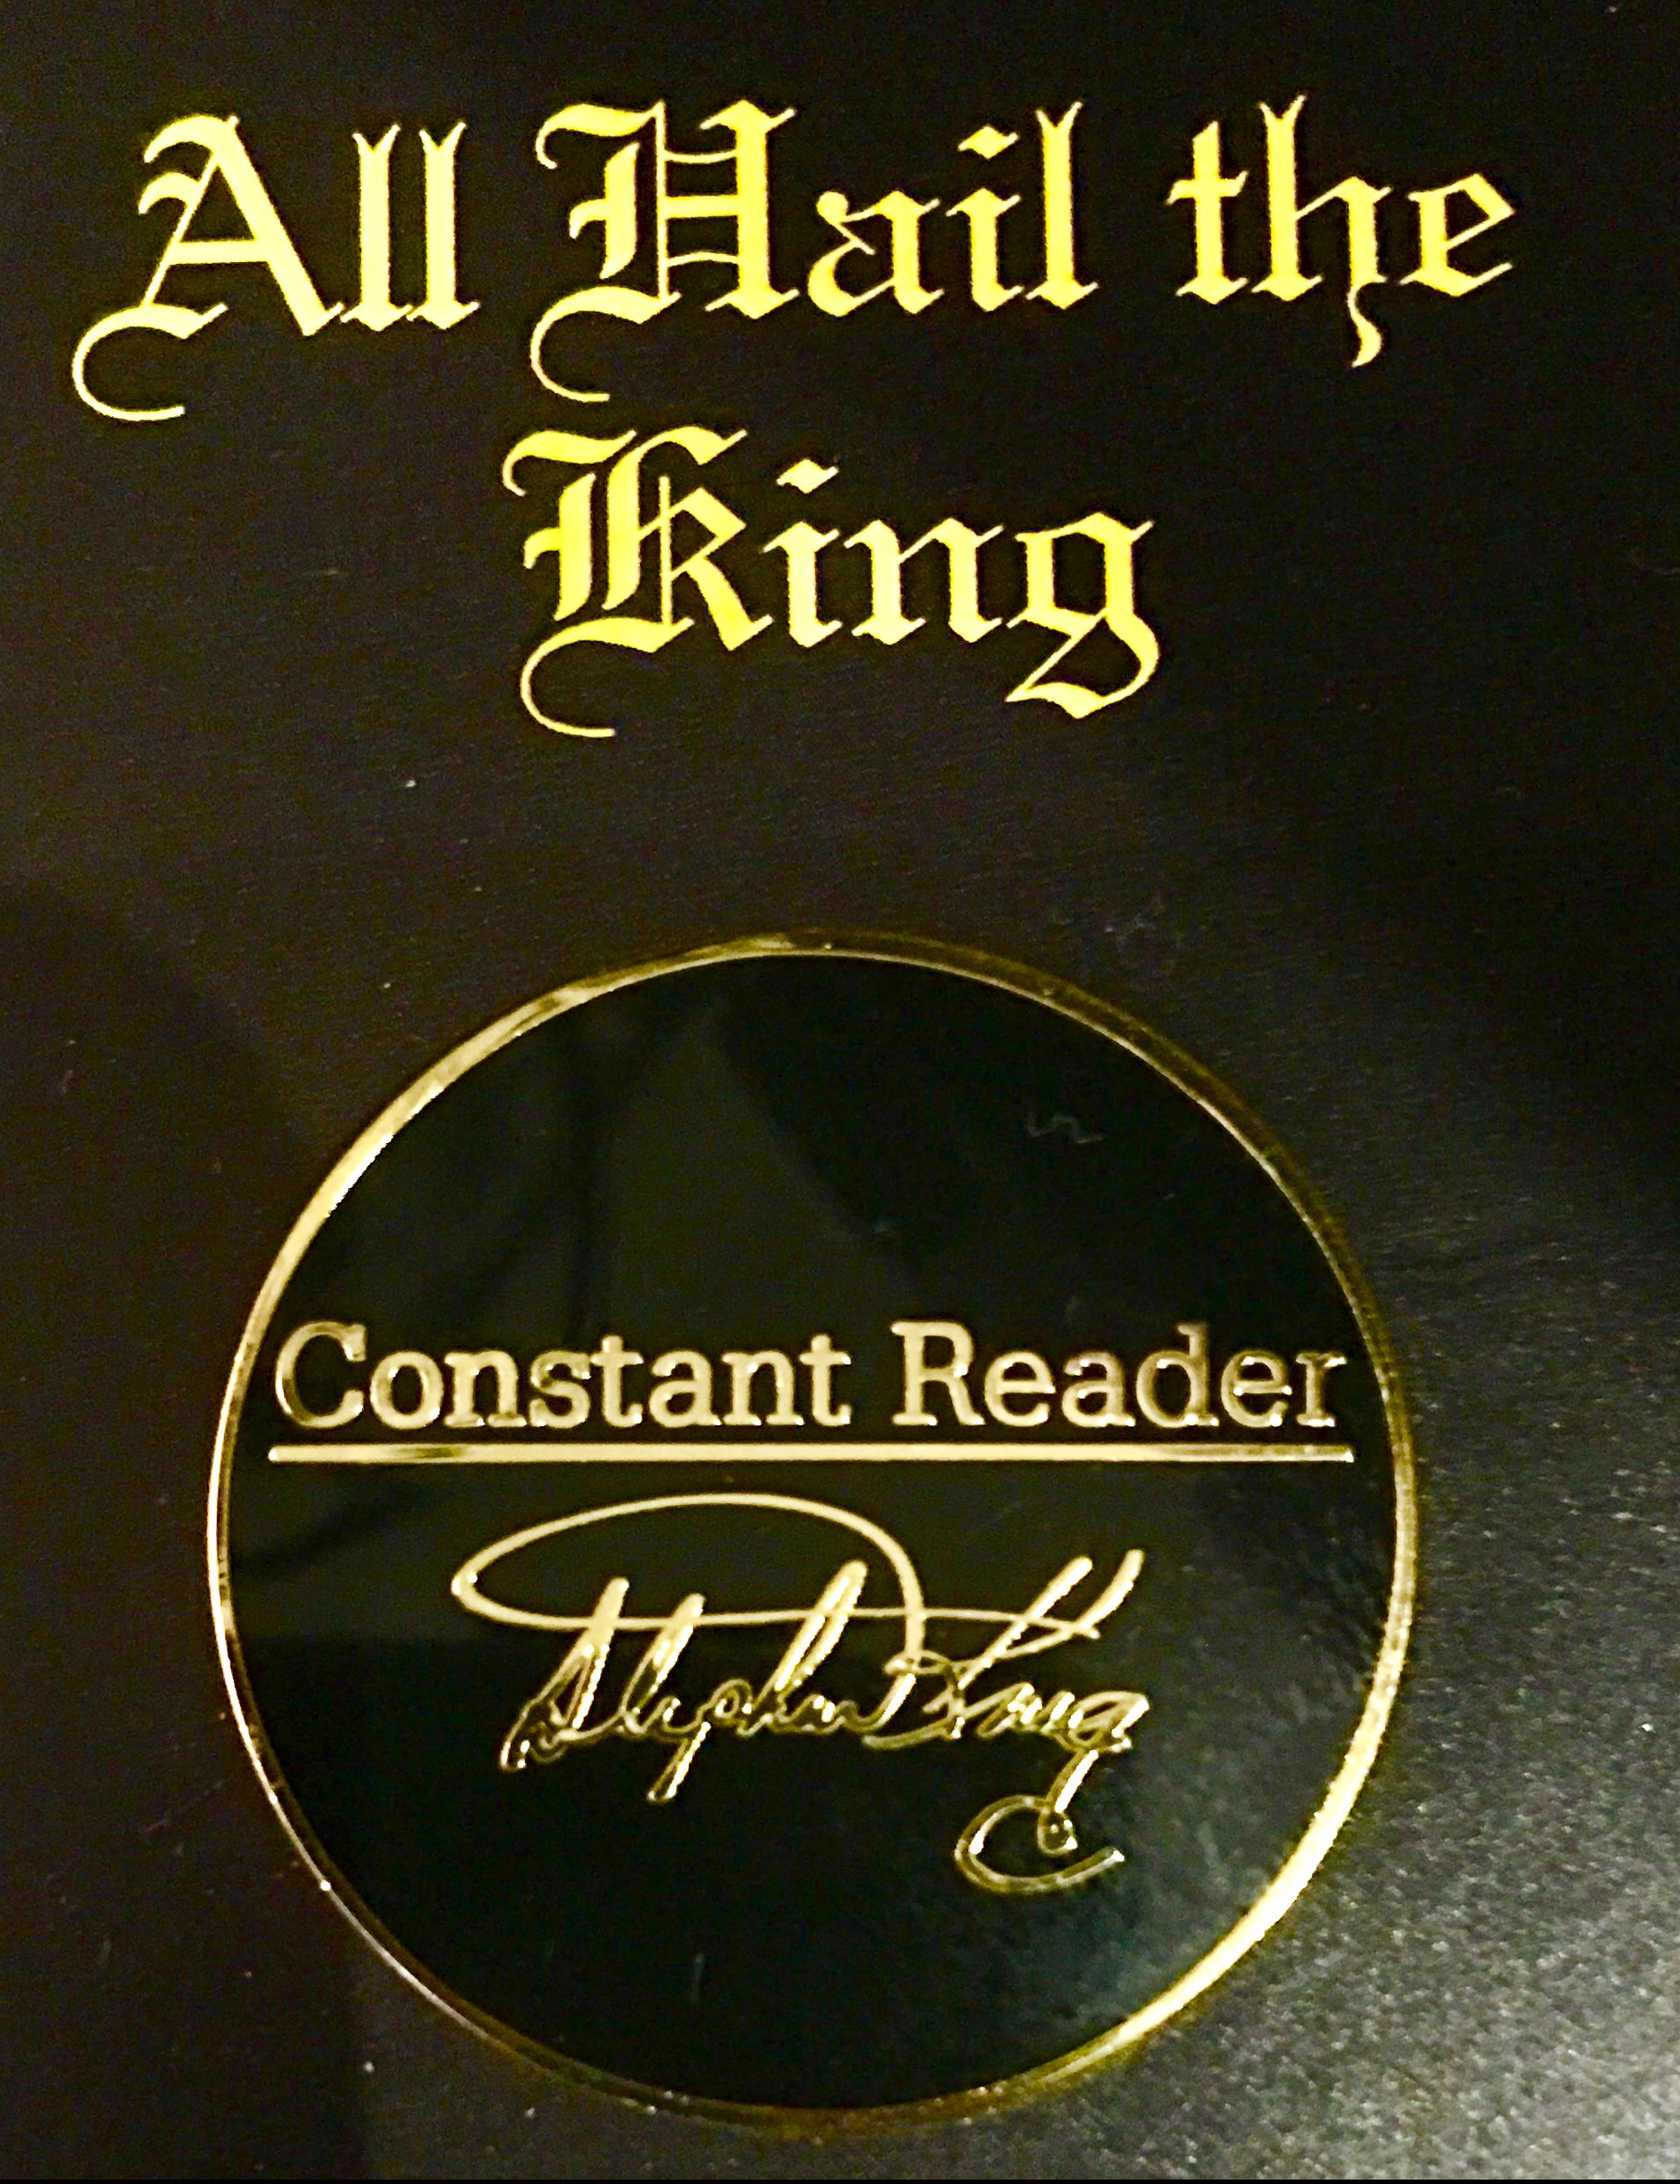 Constant Reader pin